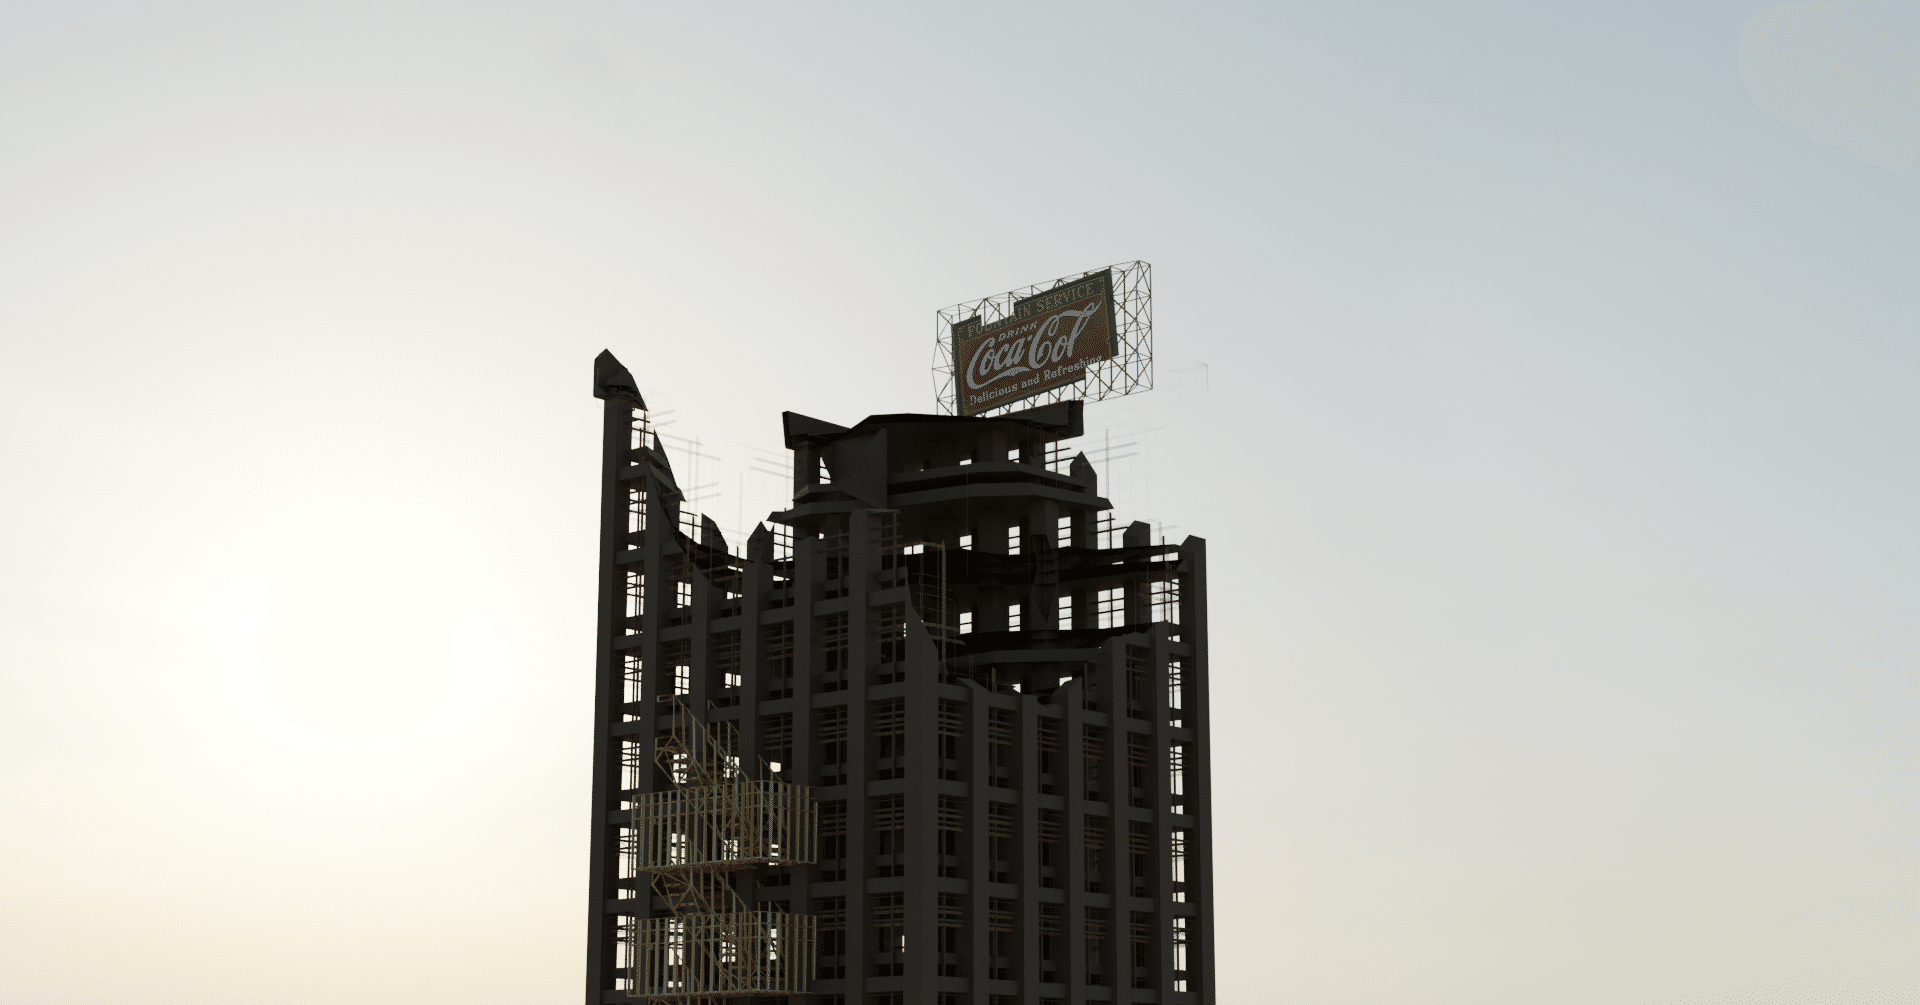 Blenderで荒廃したビルを作る タカハシ カズキ Note